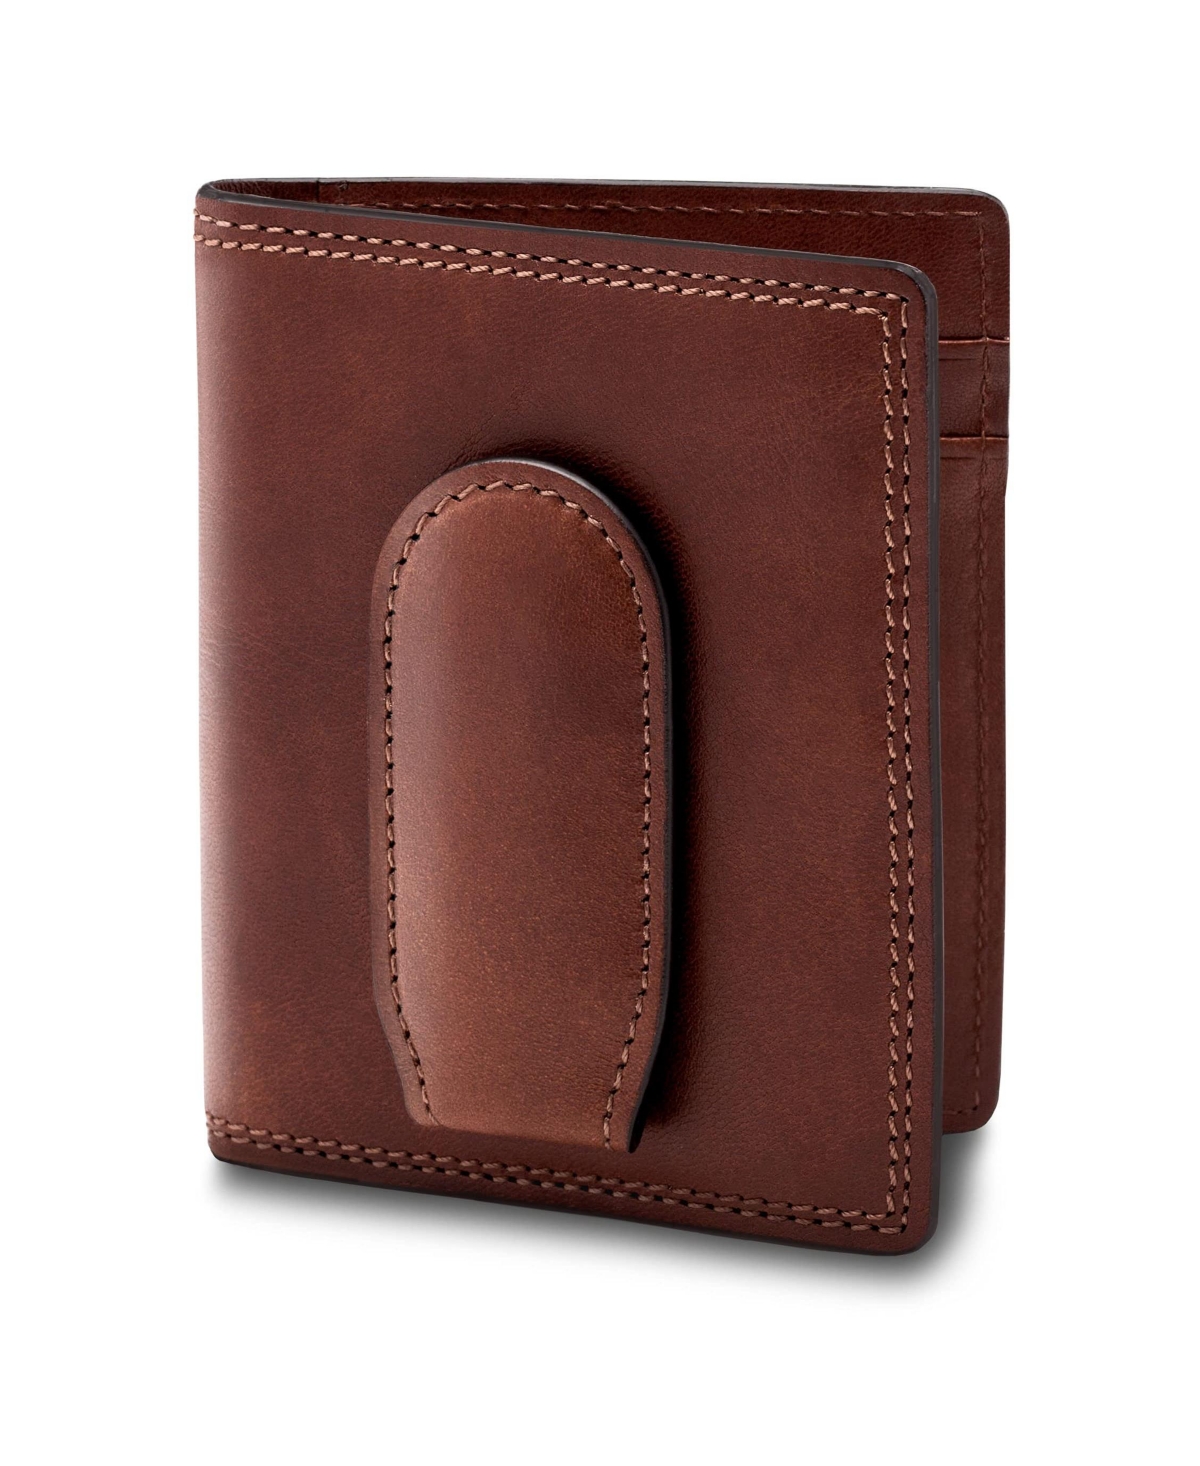 Men's Wallet, Dolce Leather Front Pocket Bifold Wallet with Magnetic Clip - Dark brown